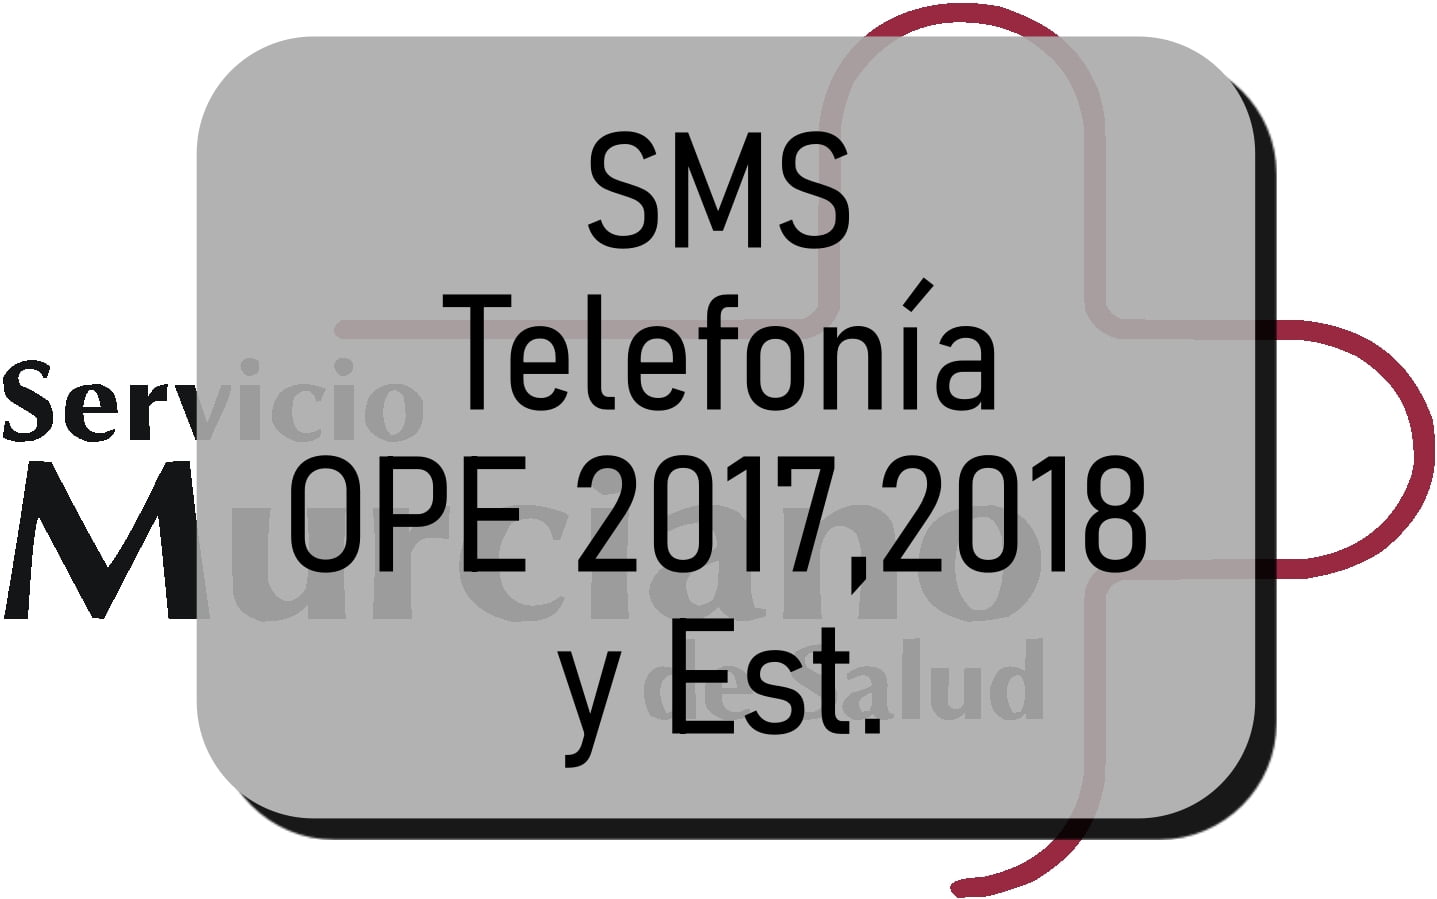 OPE SMS Telefonía